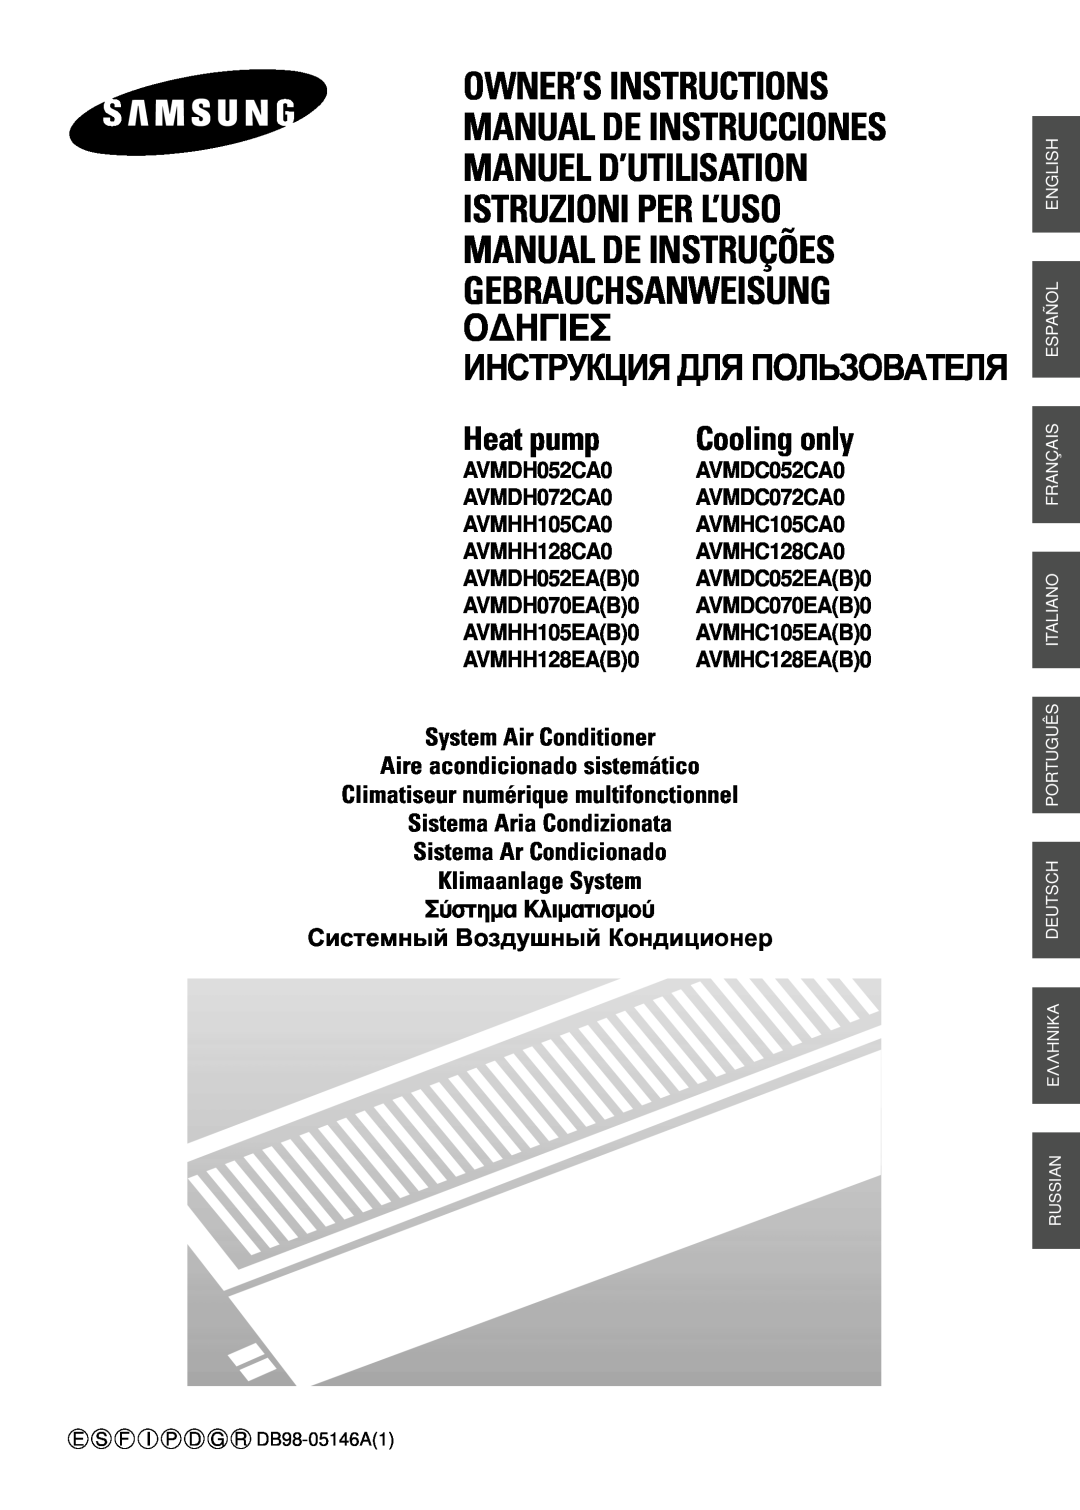 Samsung AVMHC128CA0 manuel dutilisation Owner’S Instructions Manual De Instrucciones, O¢Hie, àçëíêìäñàü Ñãü èéãúáéÇÄíÖãü 